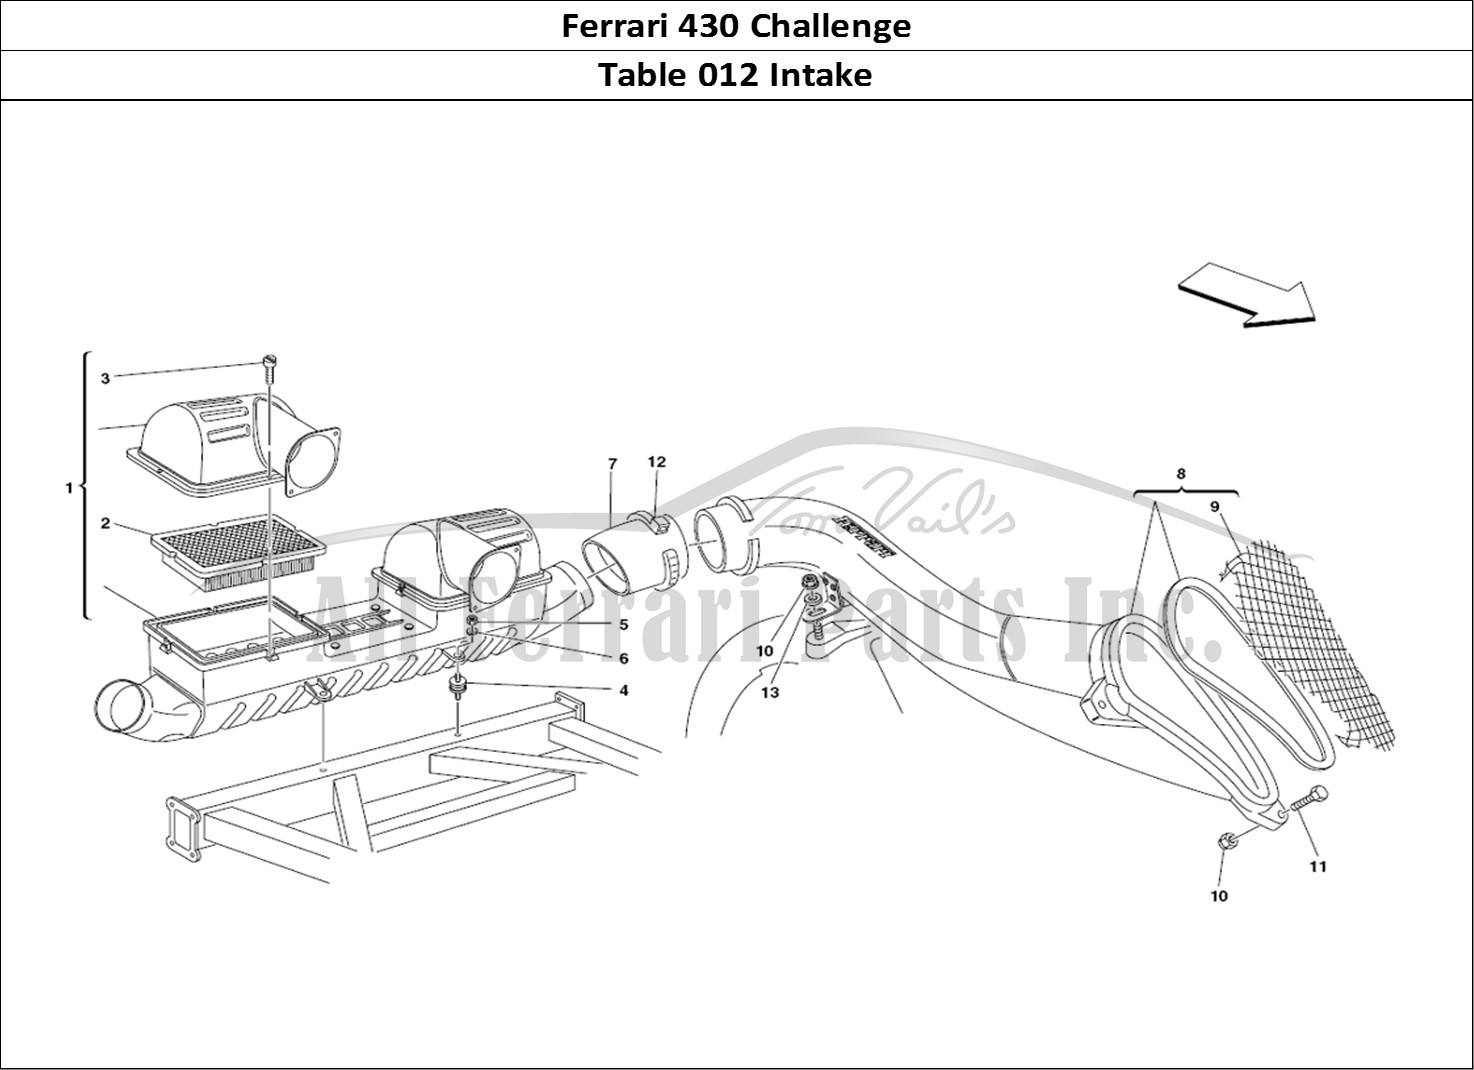 Ferrari Parts Ferrari 430 Challenge (2006) Page 012 Air Intake